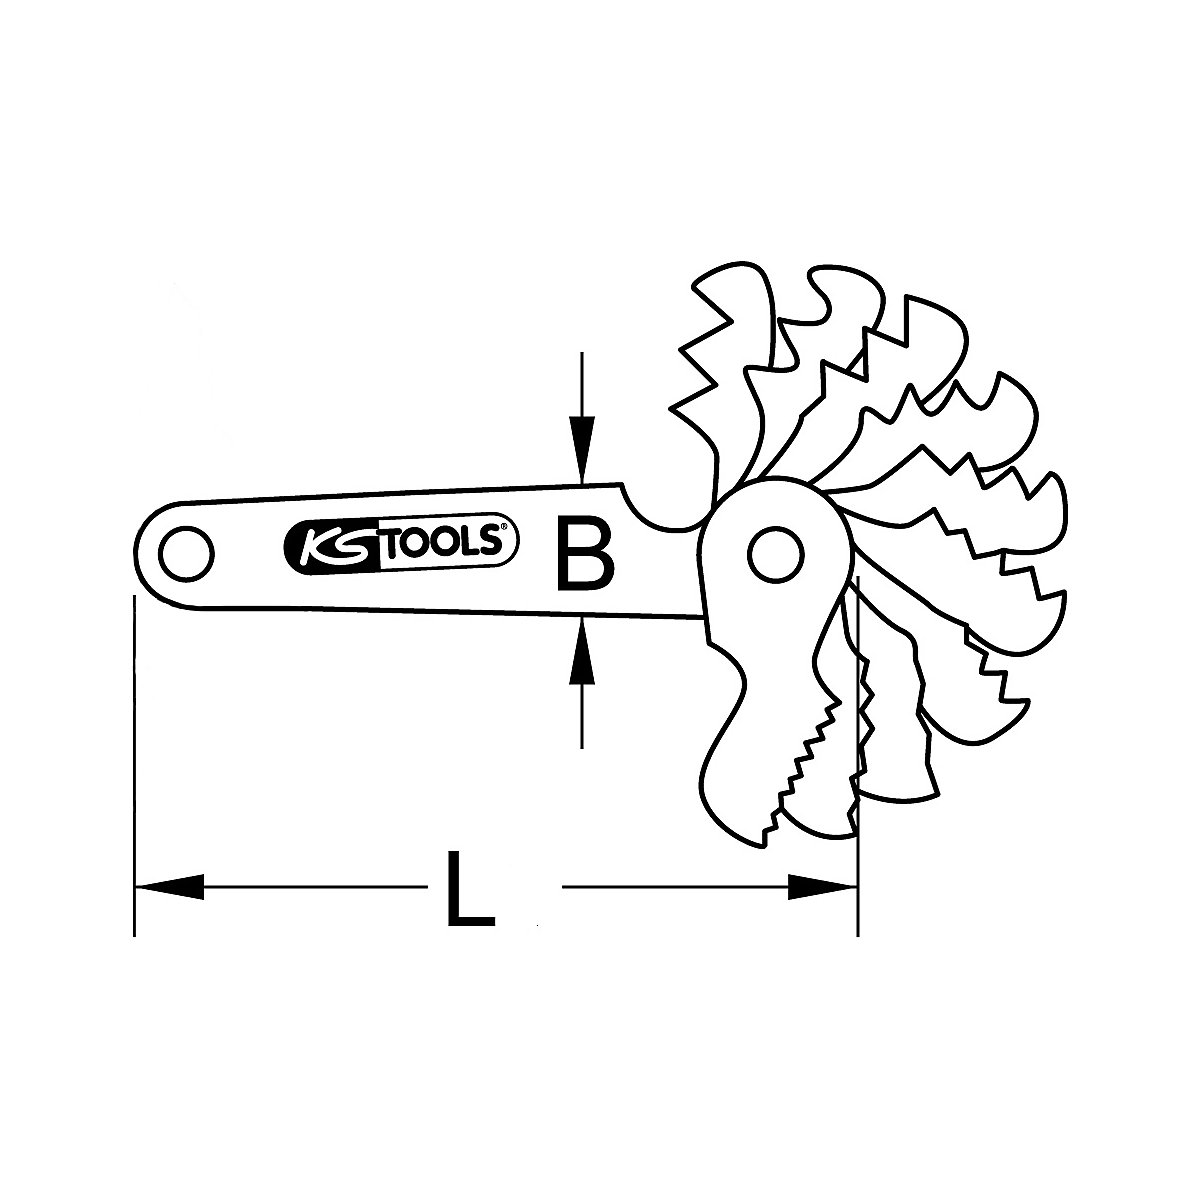 Calibrador de roscas trapezoidal de acero – KS Tools (Imagen del producto 5)-4